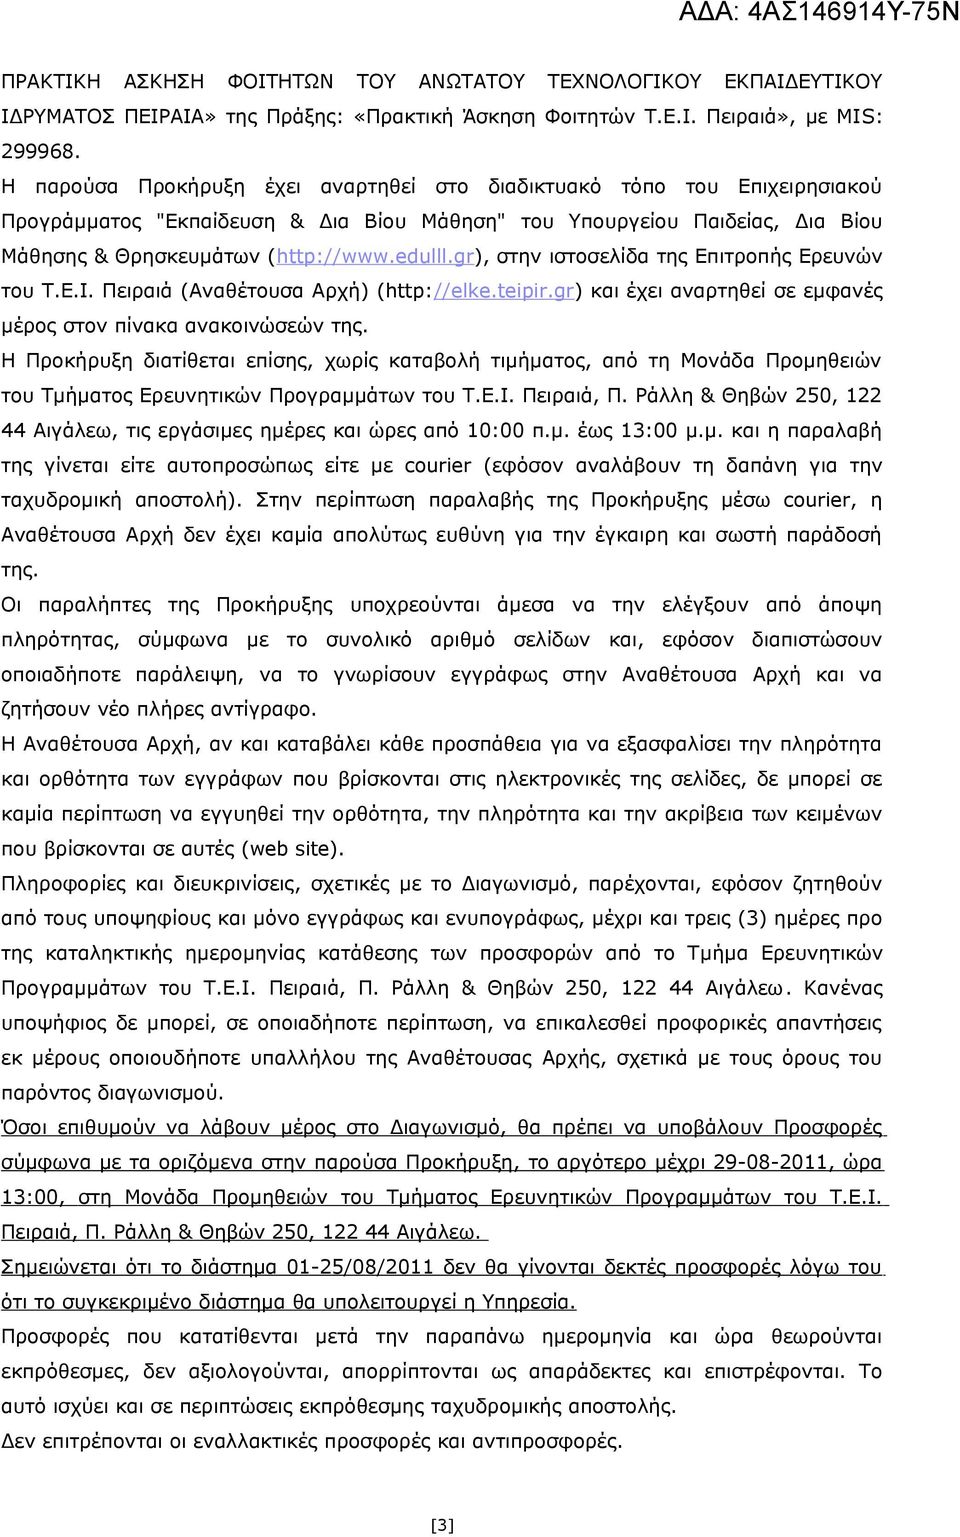 gr), στην ιστοσελίδα της Επιτροπής Ερευνών του Τ.Ε.Ι. Πειραιά (Αναθέτουσα Αρχή) (http://elke.teipir.gr) και έχει αναρτηθεί σε εμφανές μέρος στον πίνακα ανακοινώσεών της.